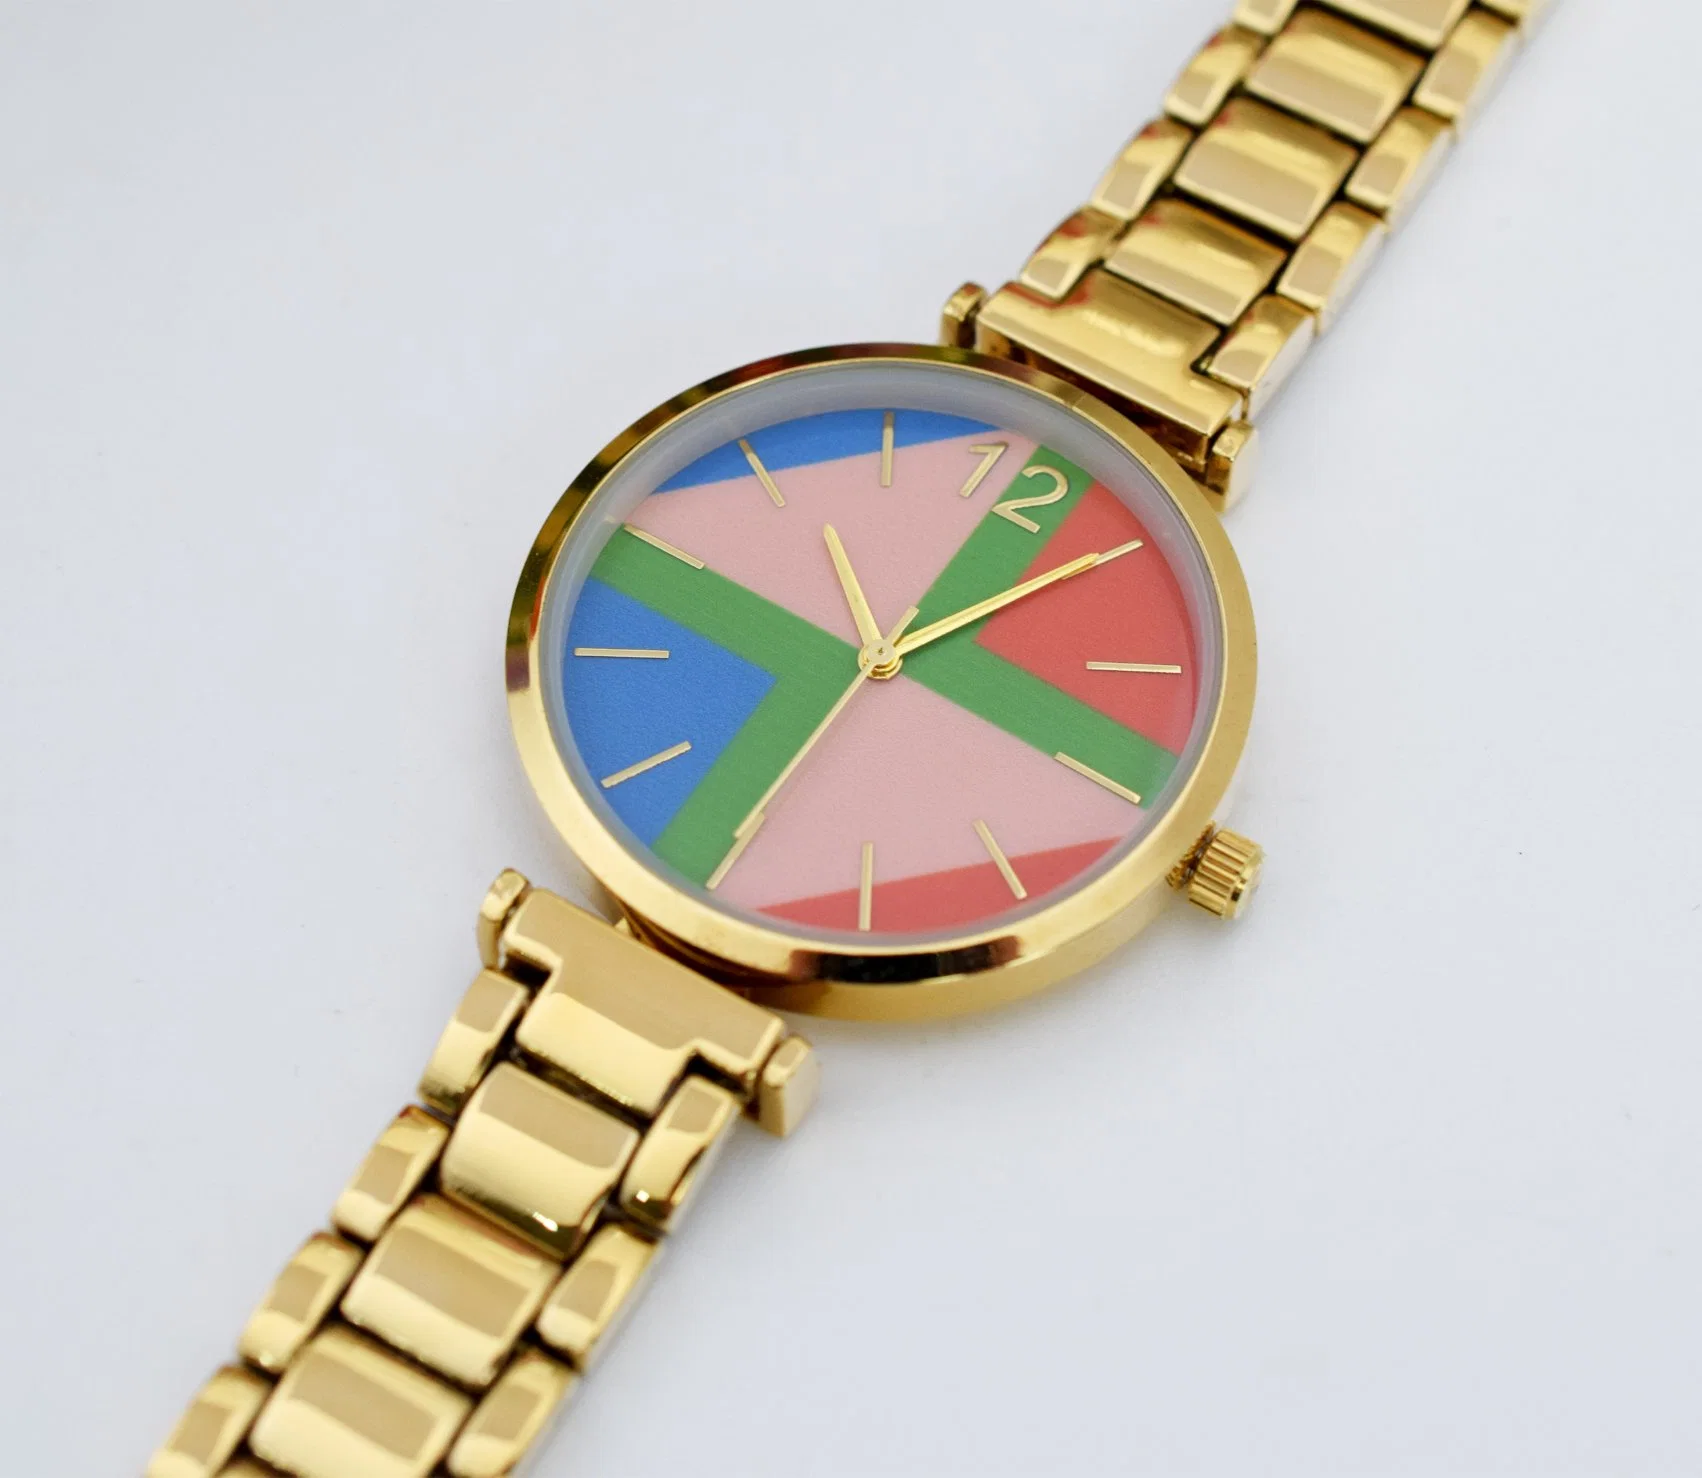 Stainless Steel Watch Gift Watch Quartz Watch Fashion Watch Lady Promotional Watch Alloy Watch